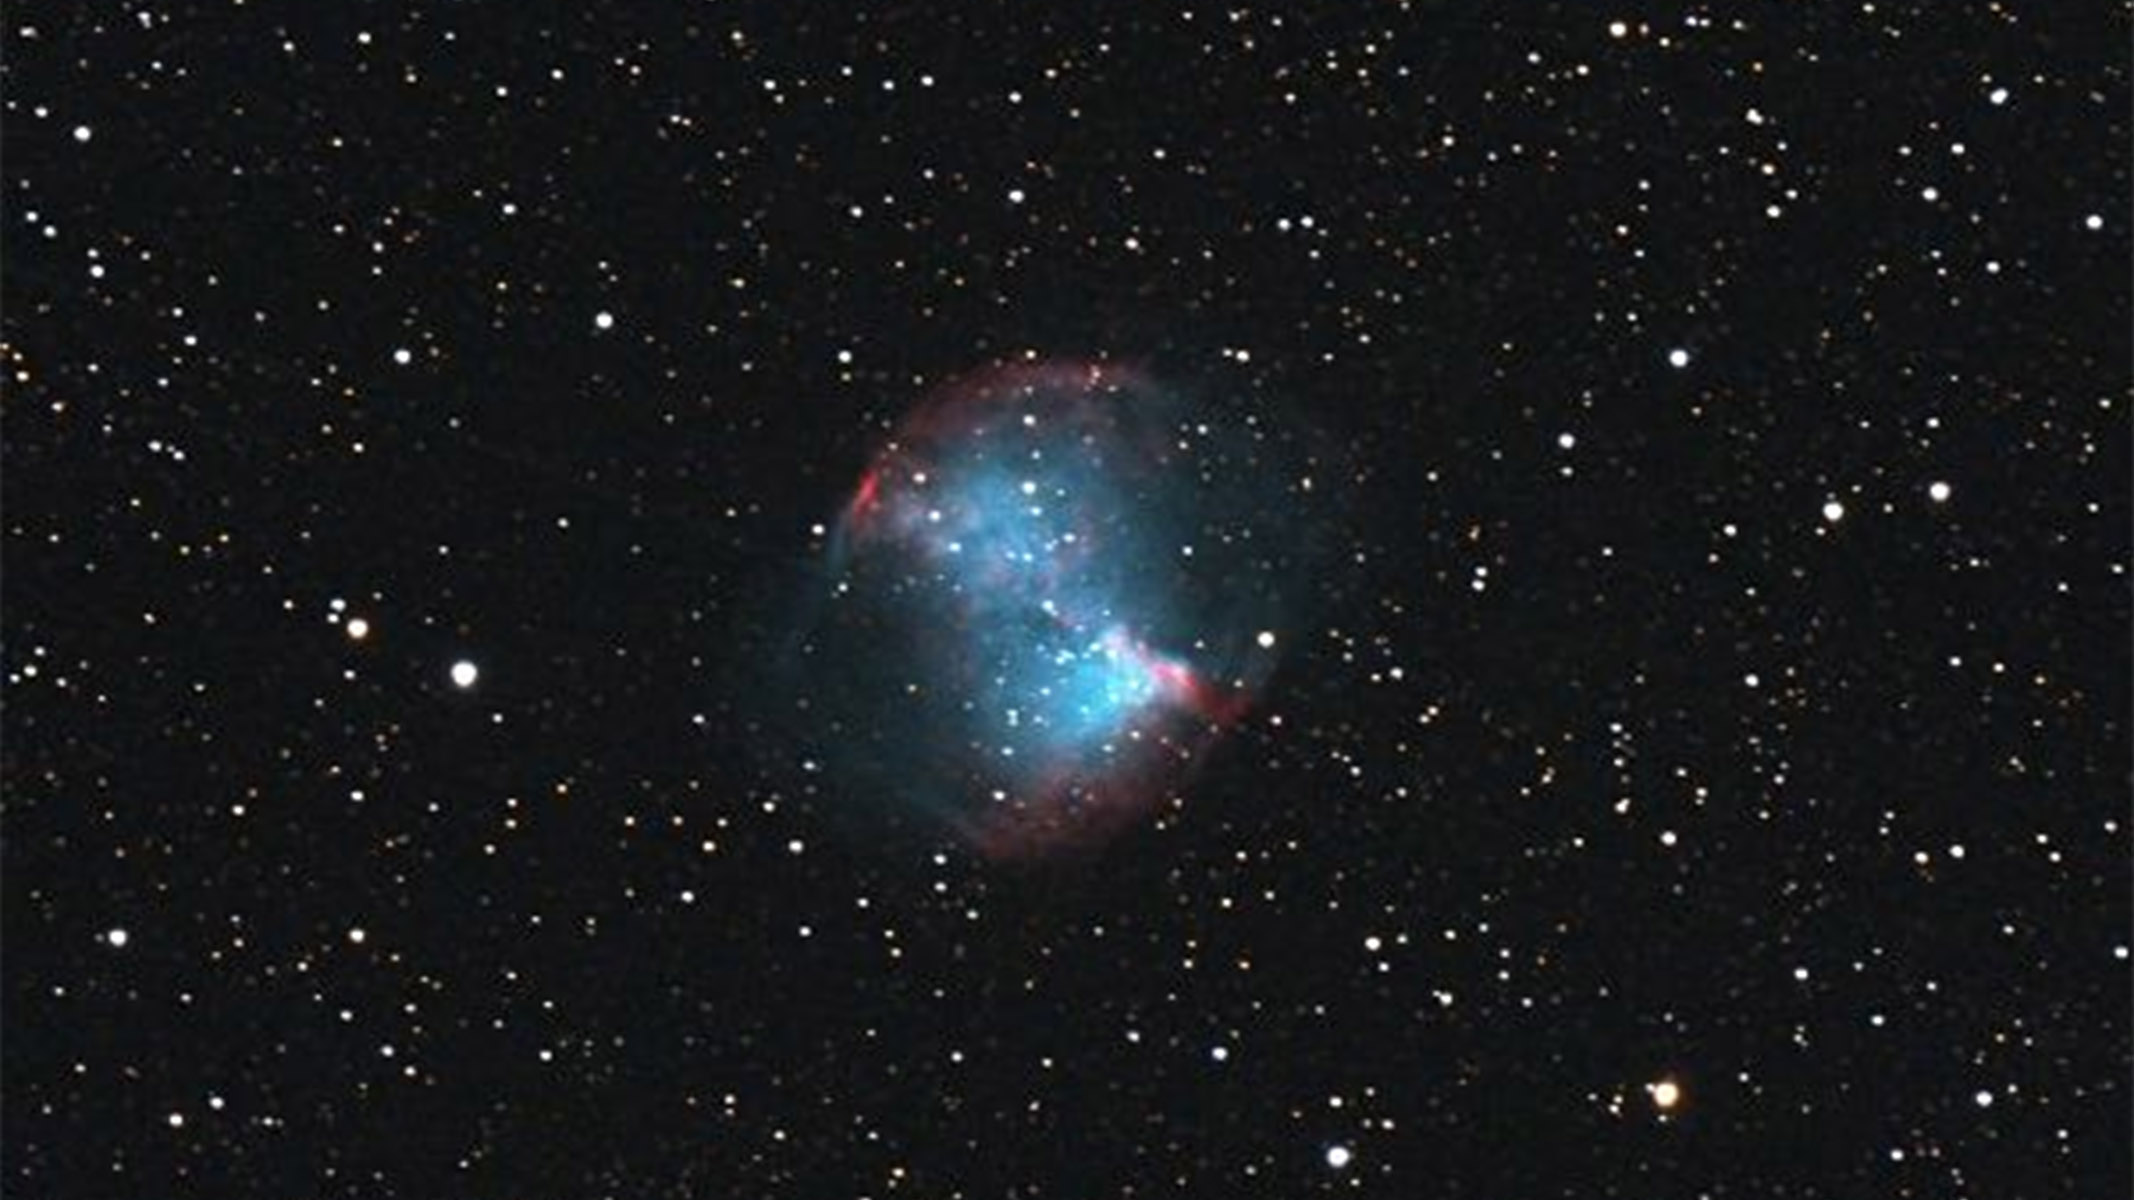 A deep celestial object captured by the advanced Celestron telescope